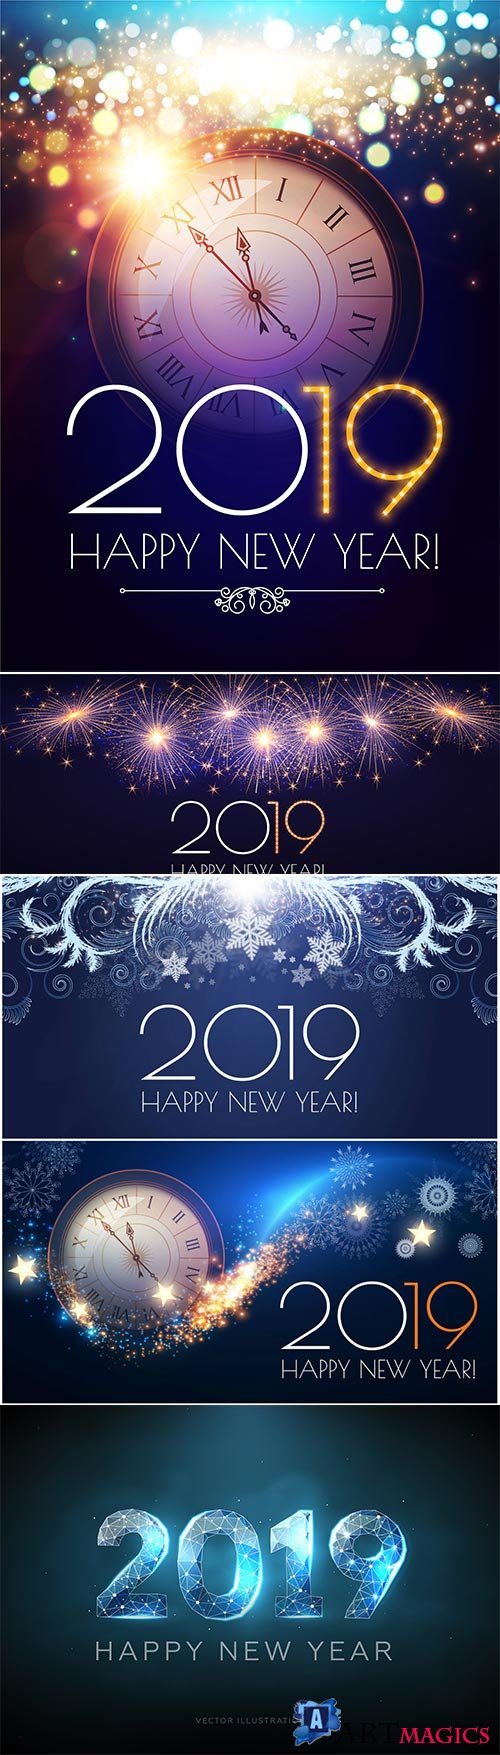 Happy New 2019 Year vector illustration, clock, fireworks